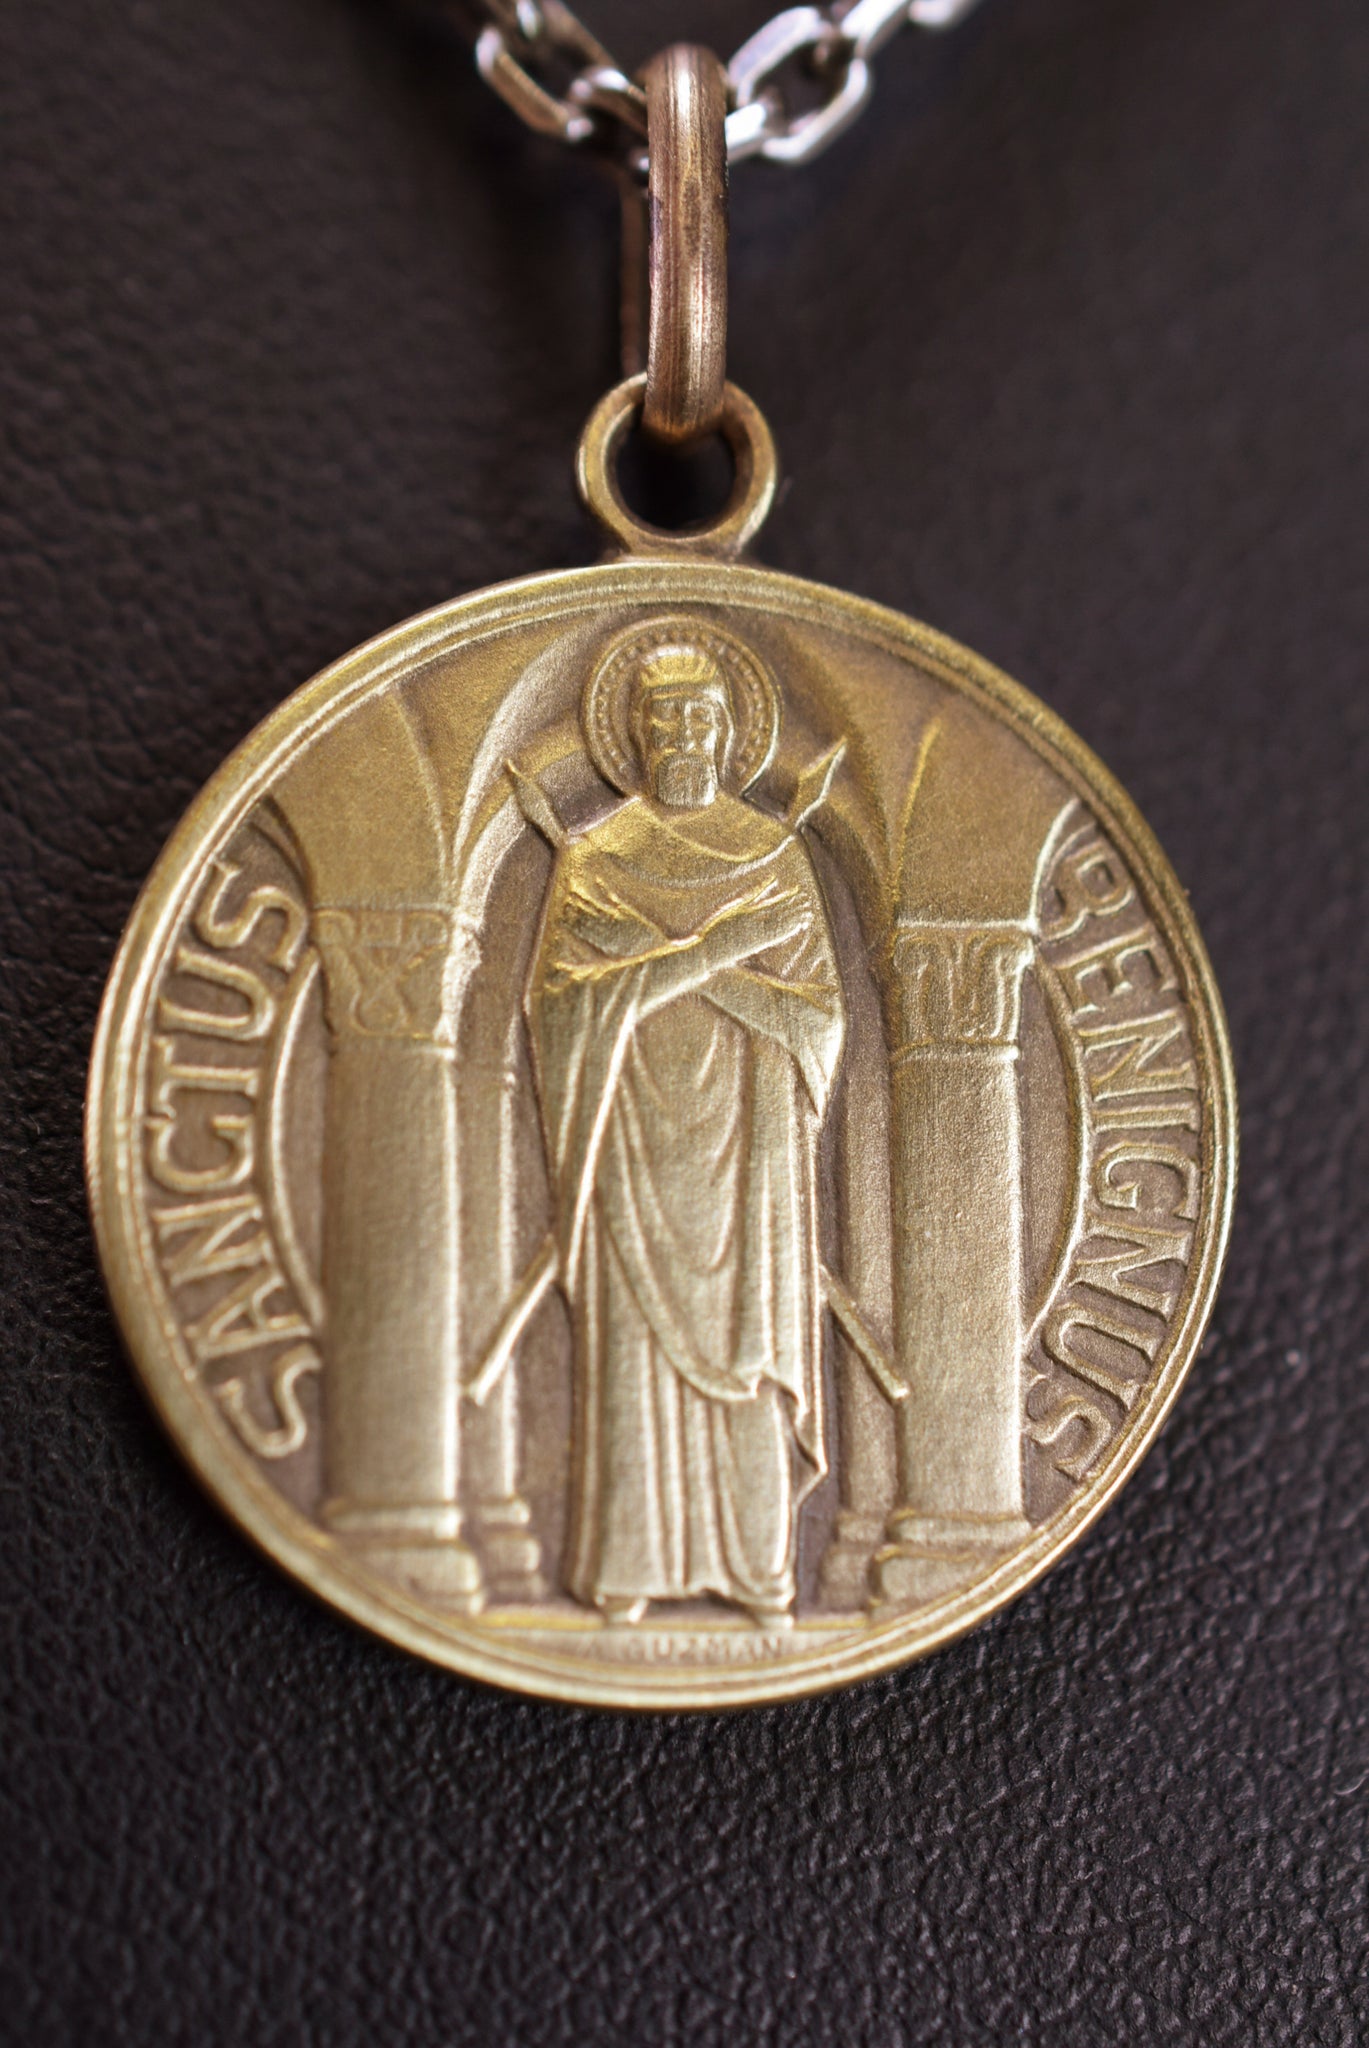 Saint Benigne Martyr Medal Sanctus Benignus Pendant by A Guzman